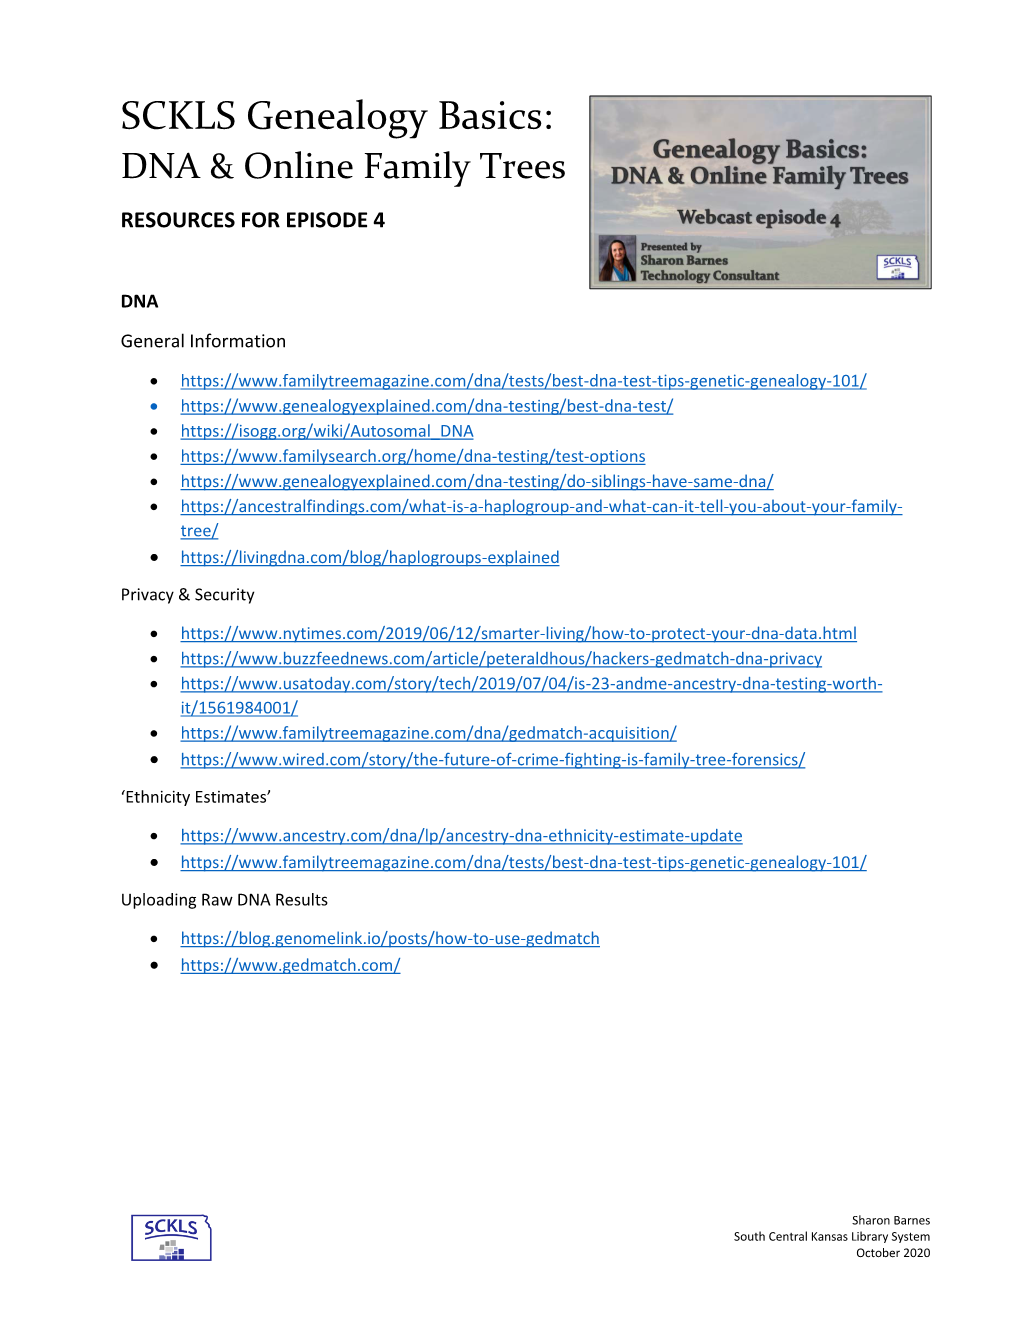 SCKLS Genealogy Basics: DNA & Online Family Trees